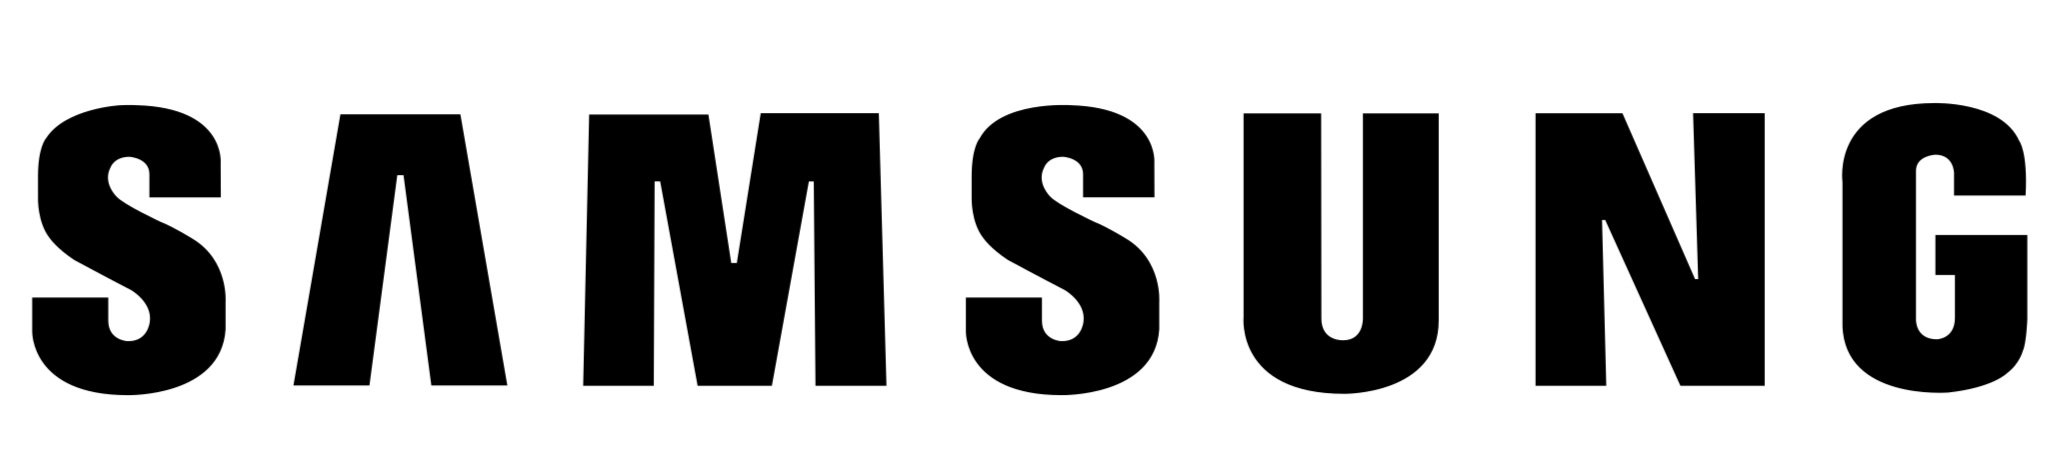 samsung-1-logo-png-transparent.jpg